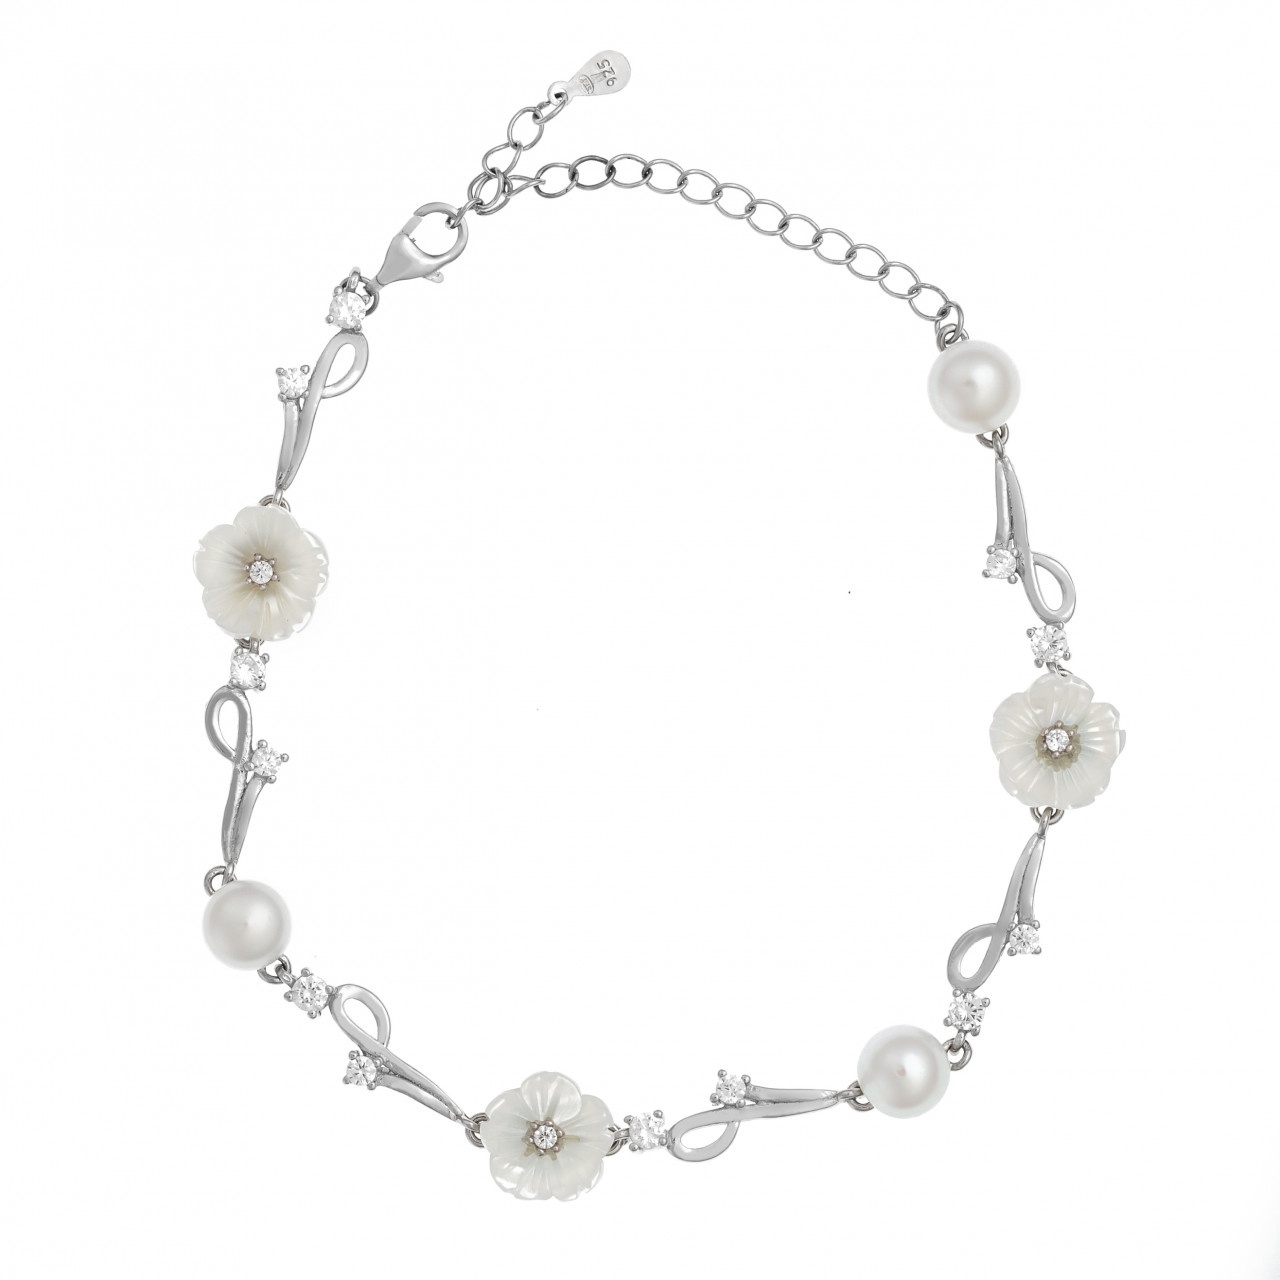 Bratara din Argint 925 8.3g - Perle si Floricele